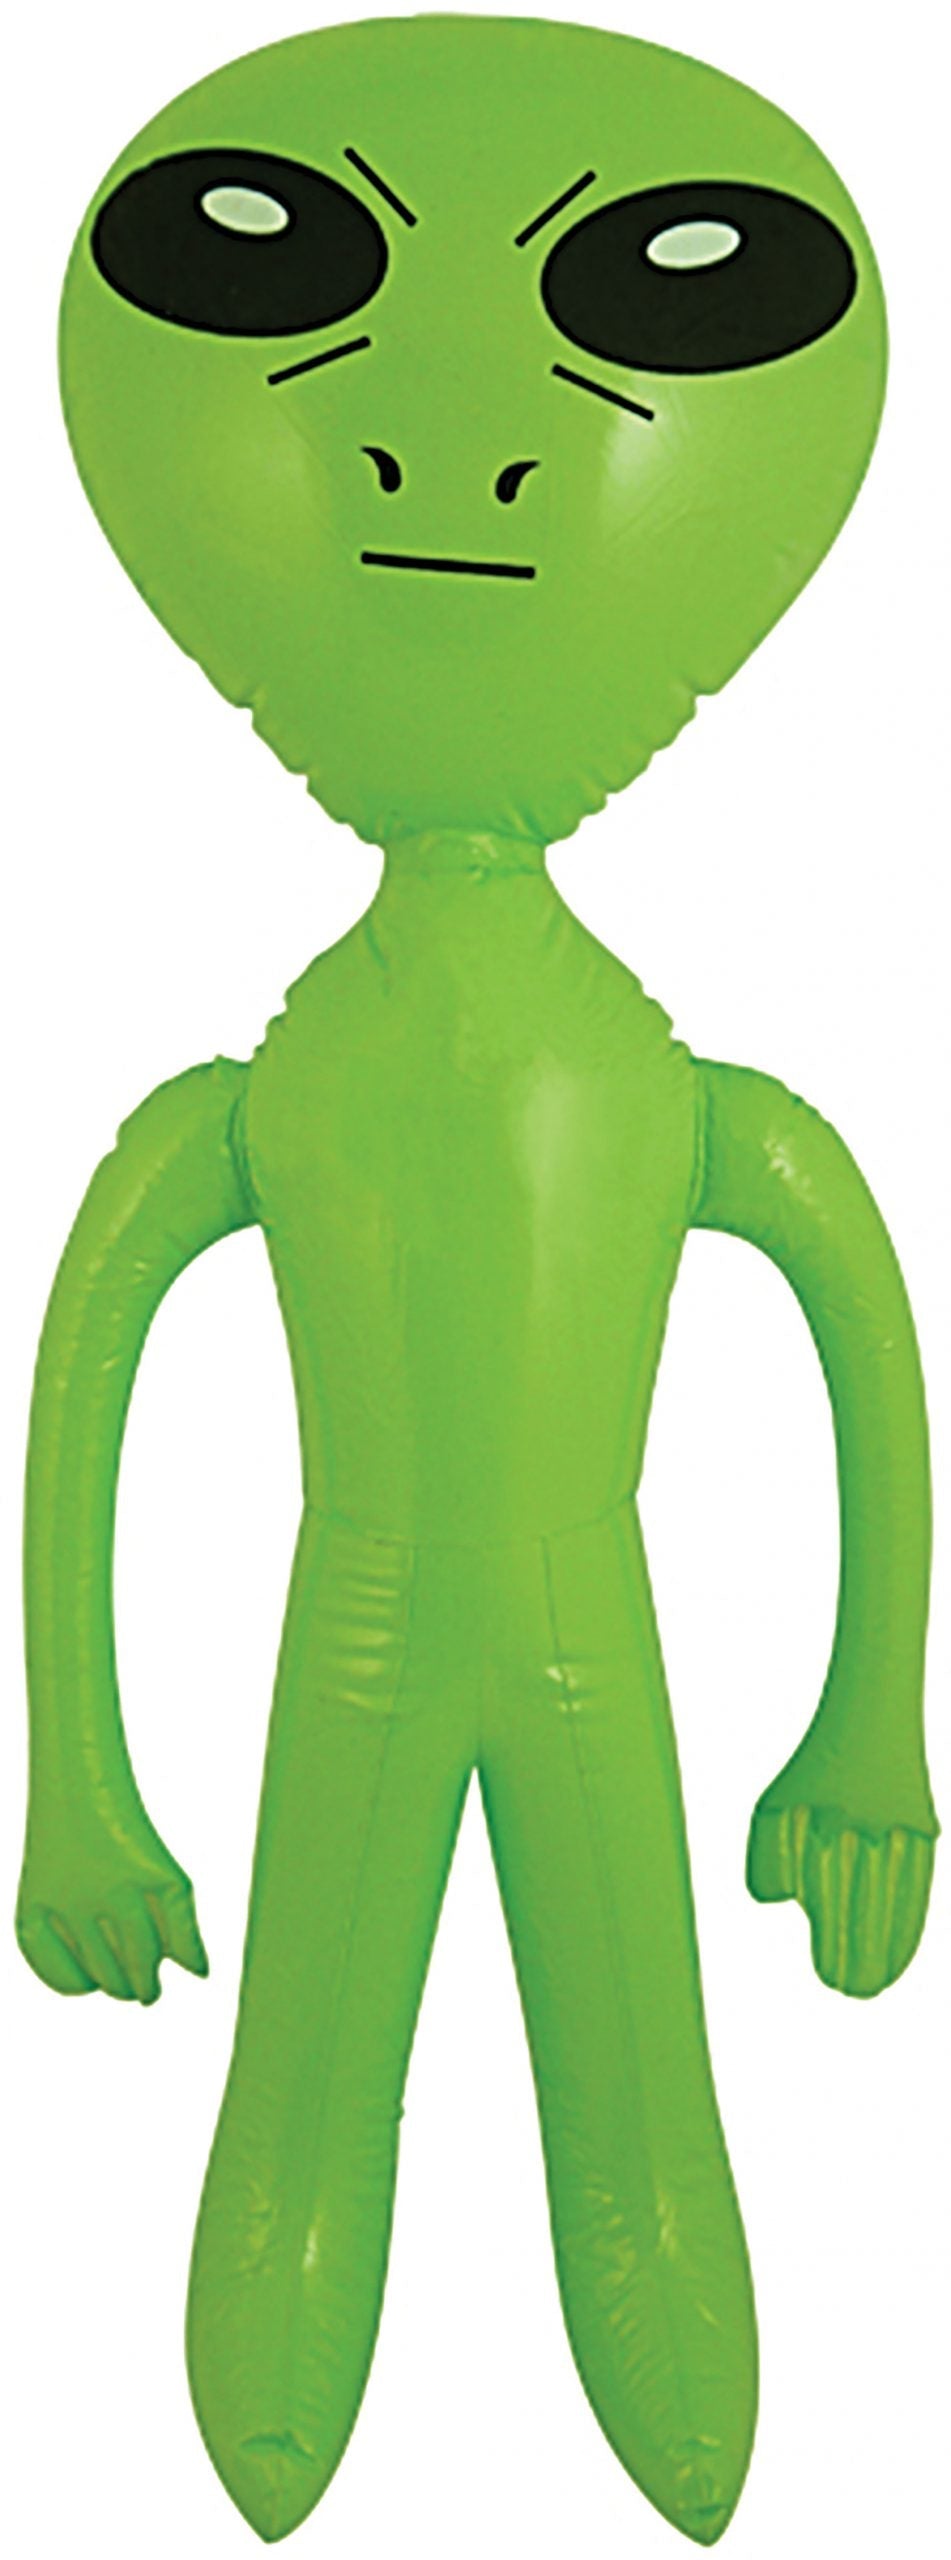 Inflatable Alien Items Unisex_1 IJ046